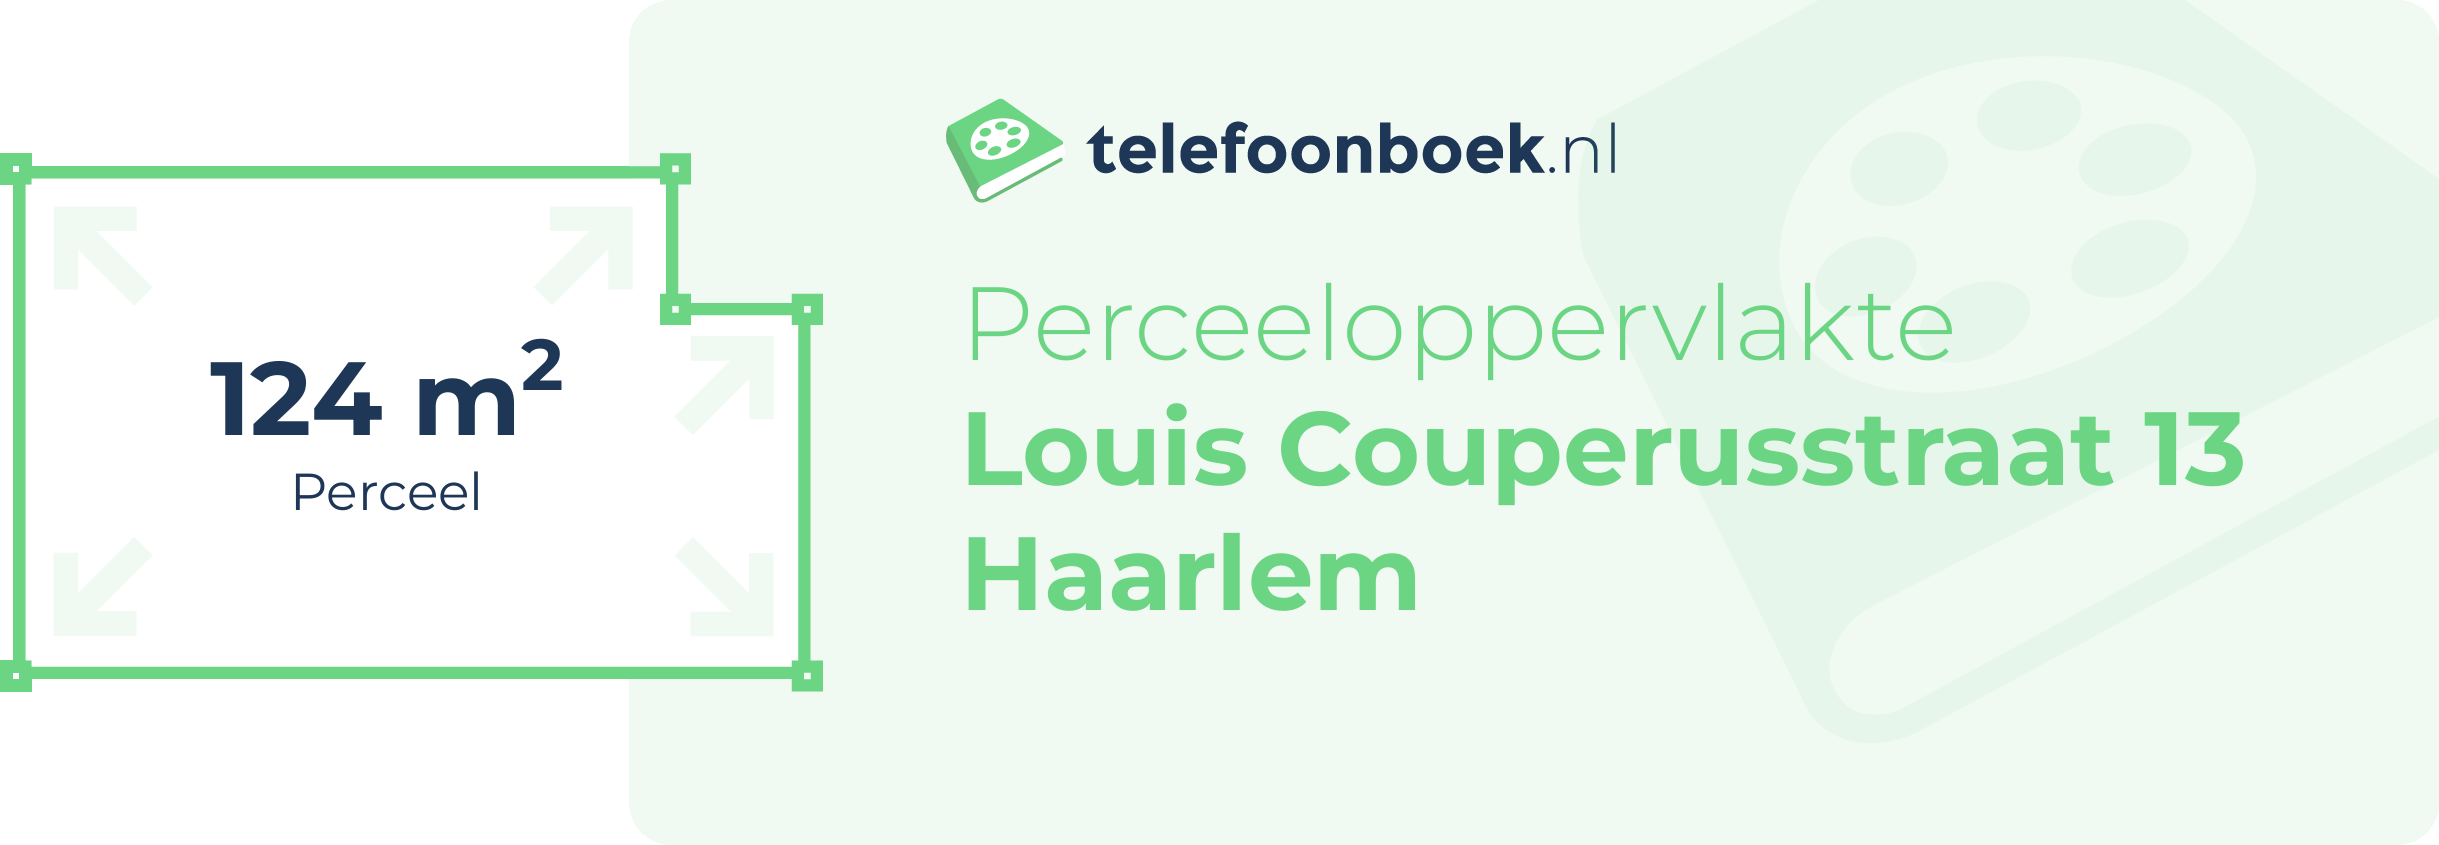 Perceeloppervlakte Louis Couperusstraat 13 Haarlem